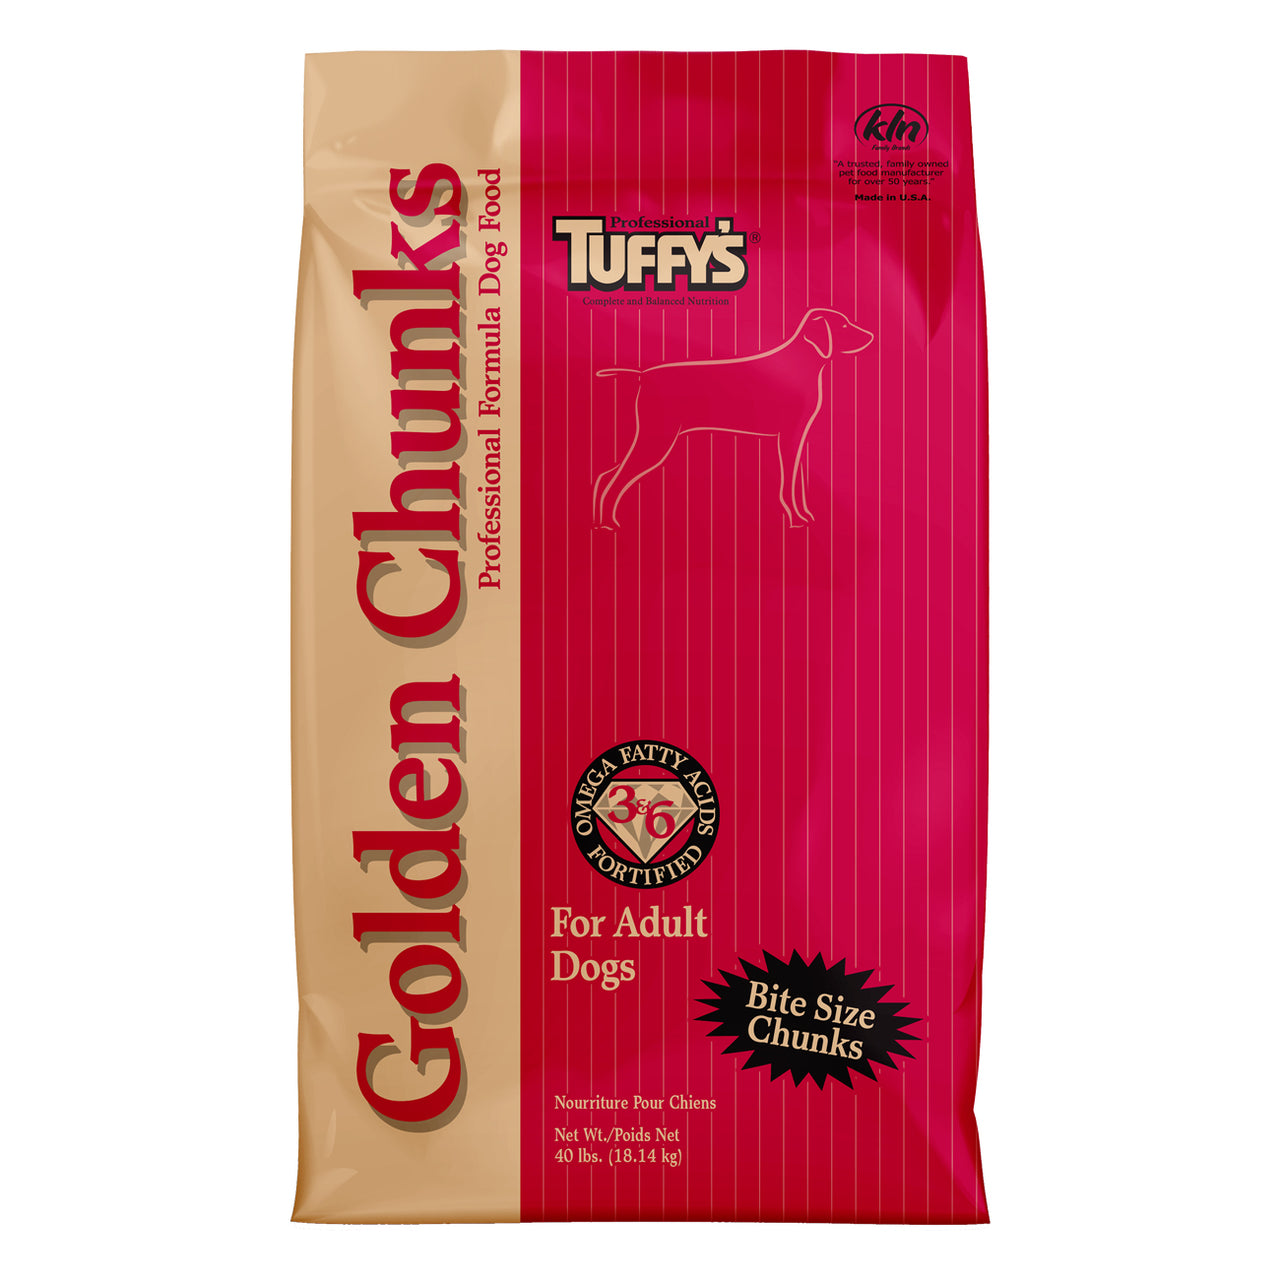 Tuffy’s Golden Chunks Professional Formula Dog Food 40 lbs